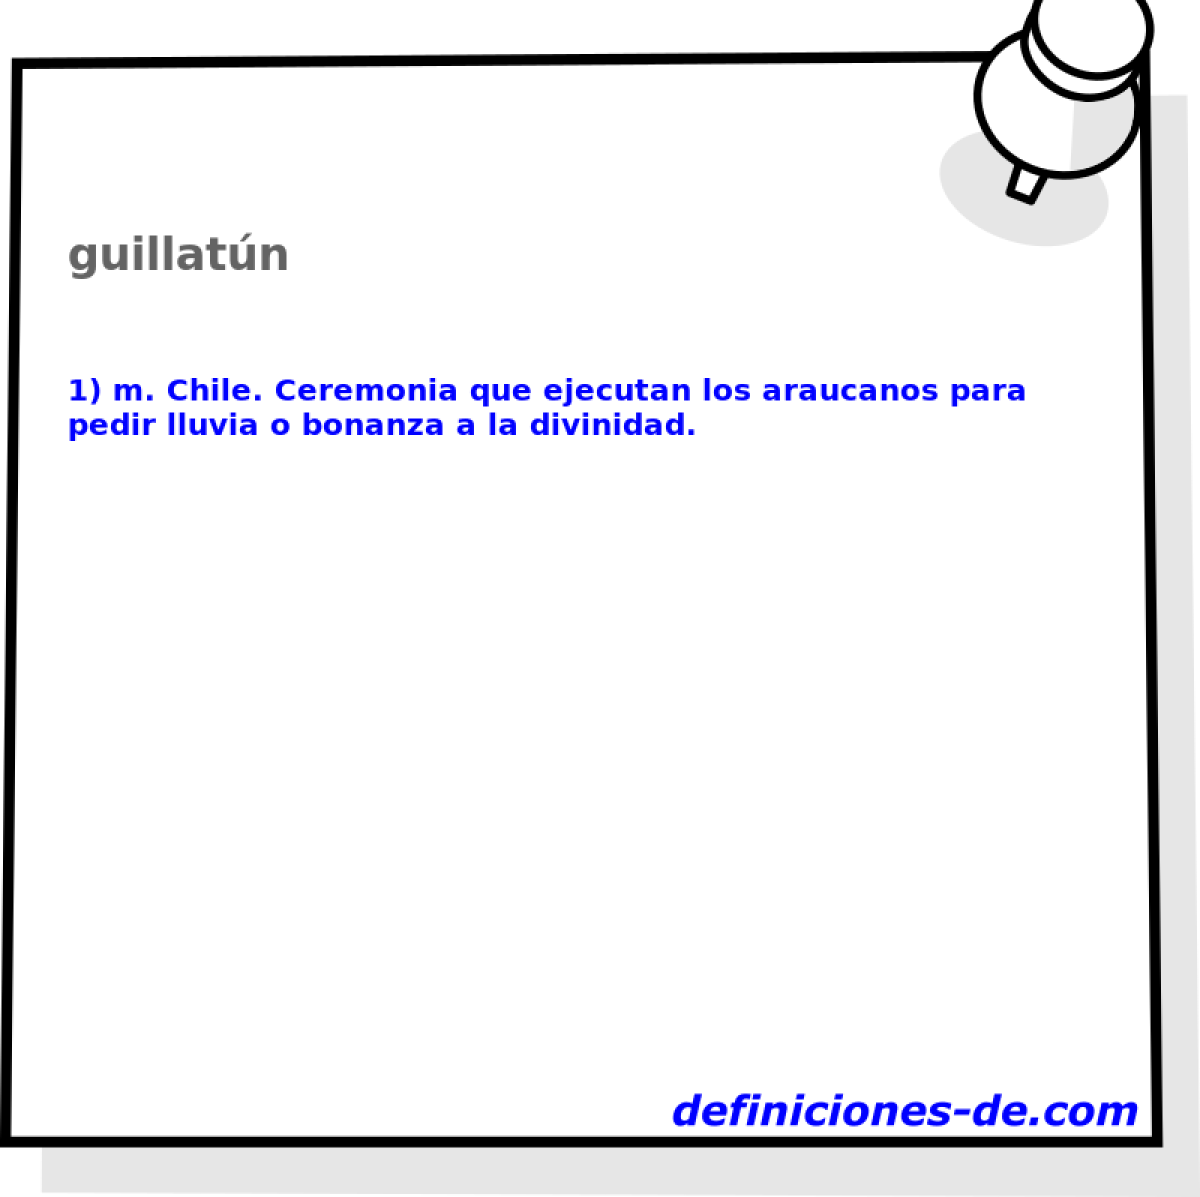 guillatn 